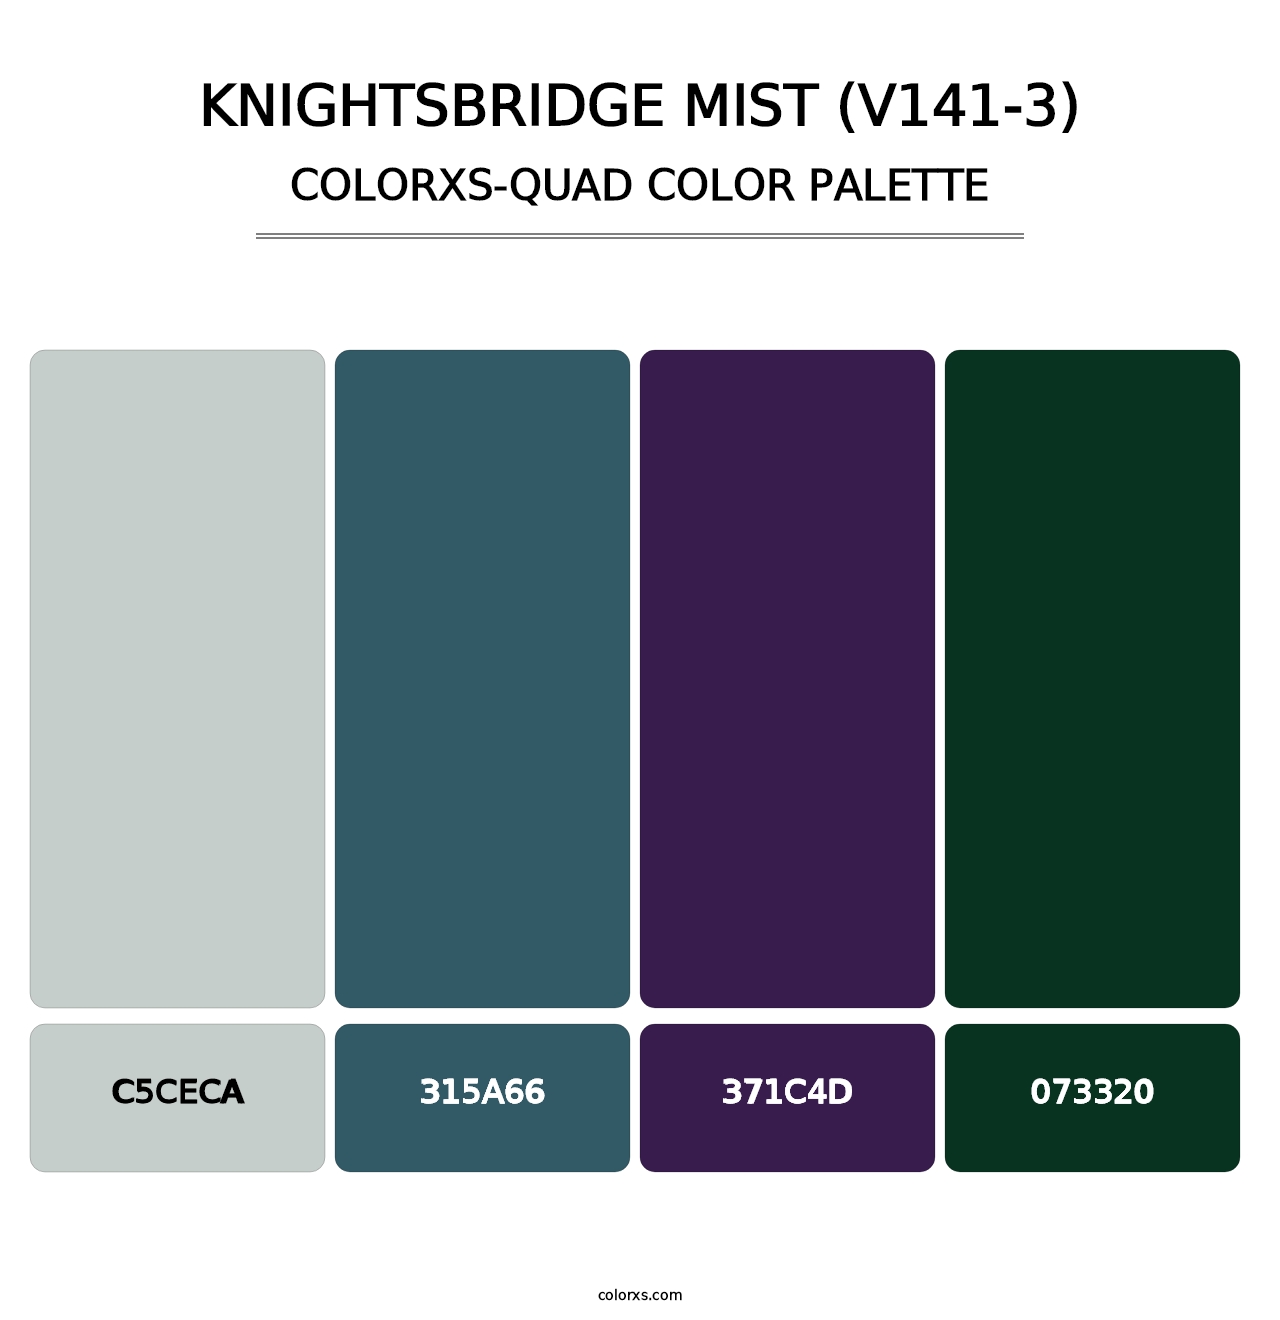 Knightsbridge Mist (V141-3) - Colorxs Quad Palette